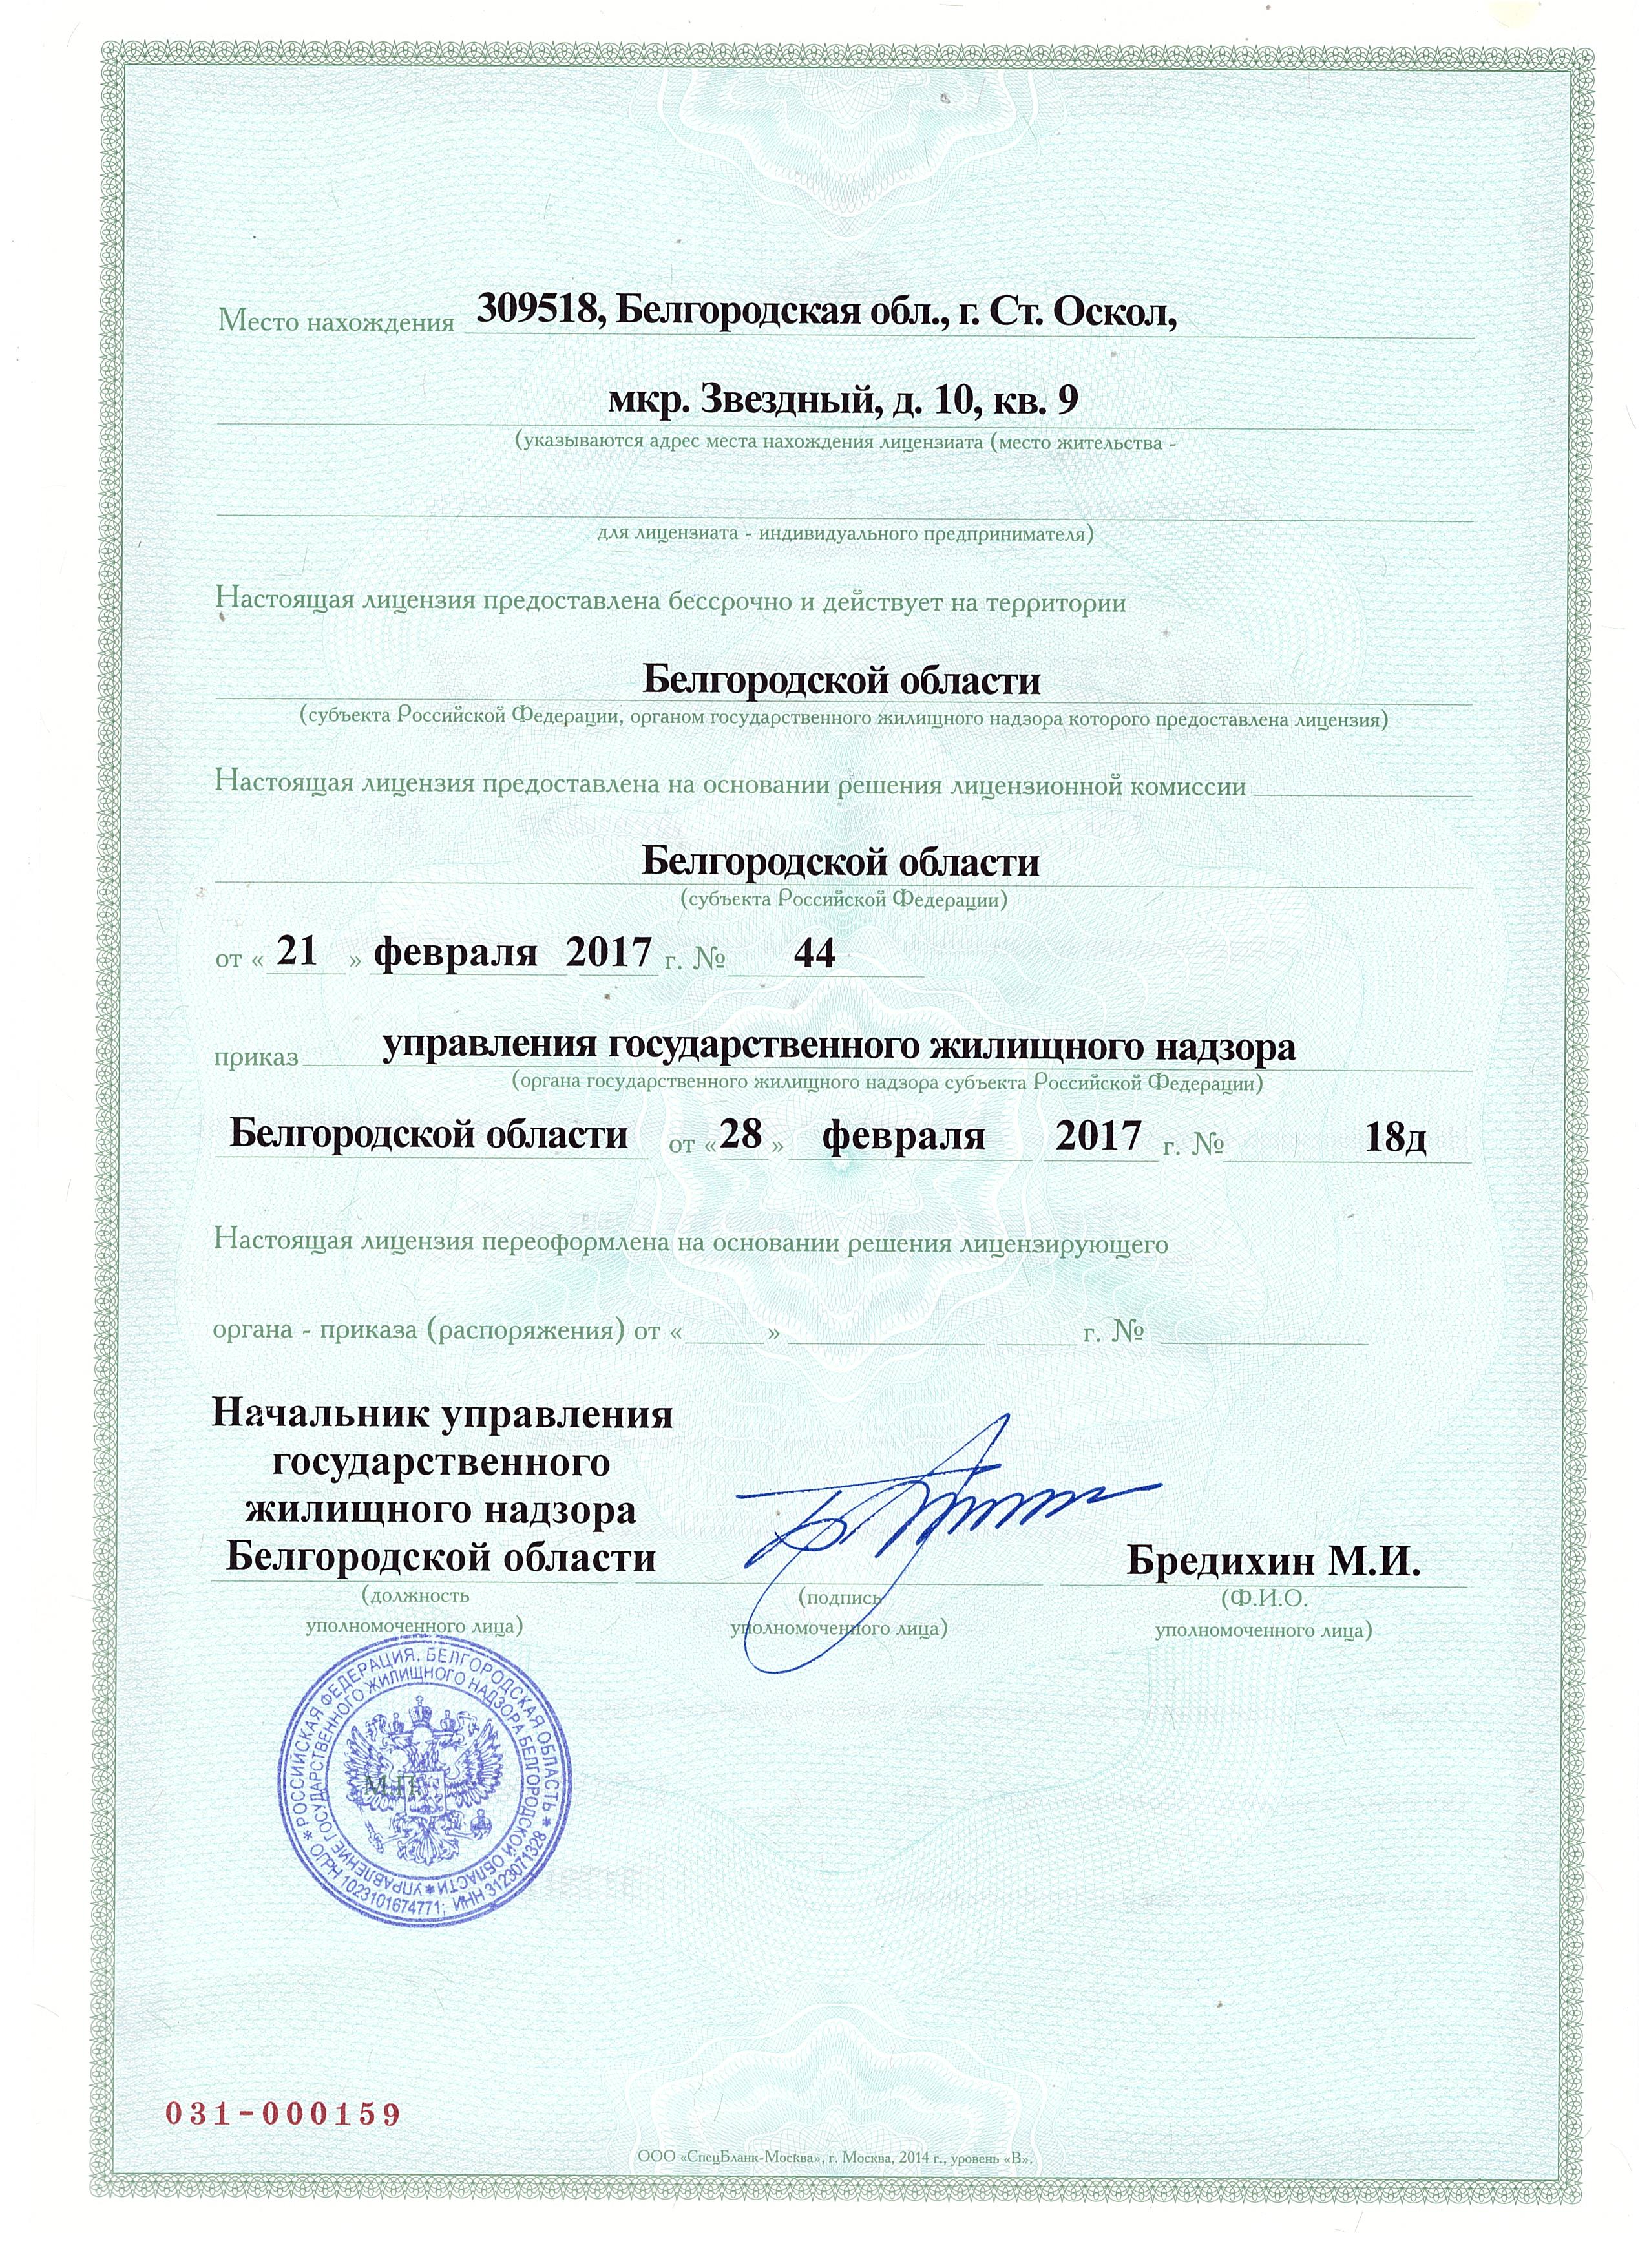 Лицензия на управление МКД №159 от 28.02.2017